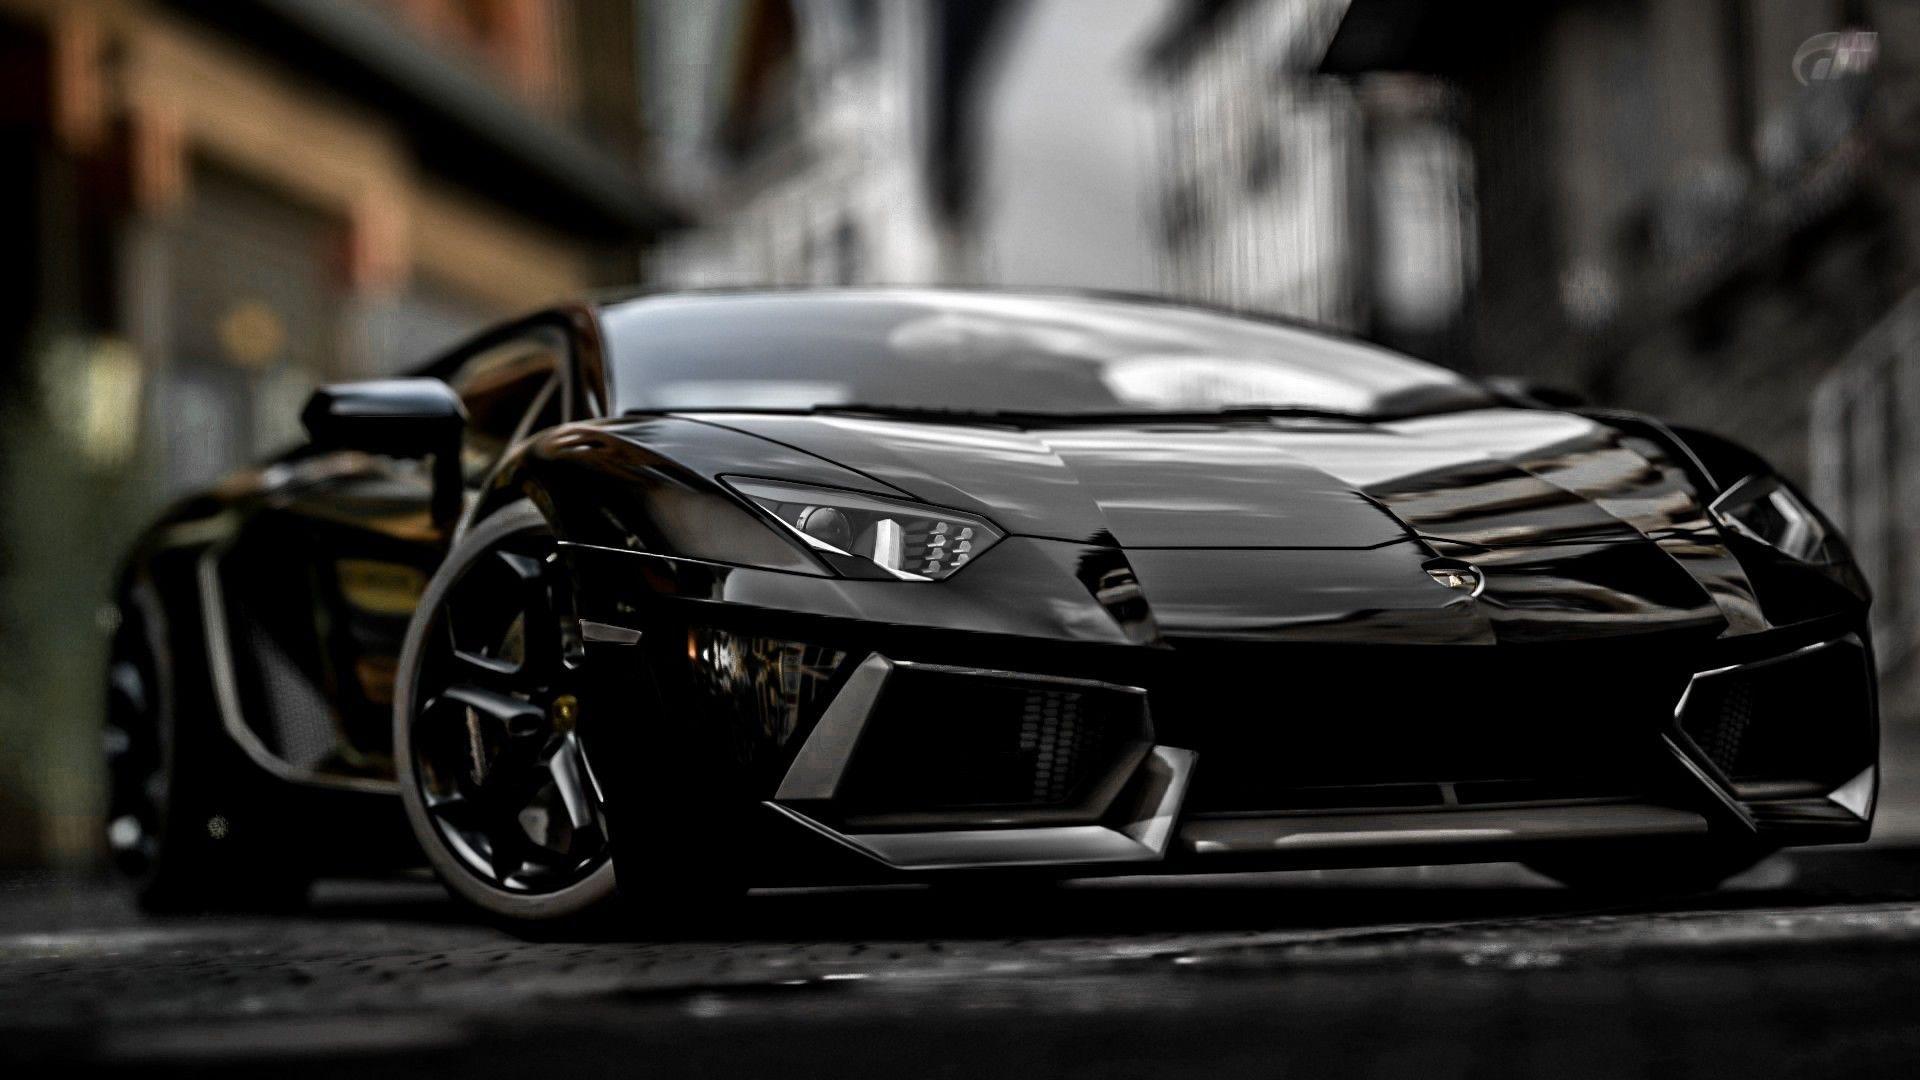 Lamborghini Aventador Black Hd Wallpaper